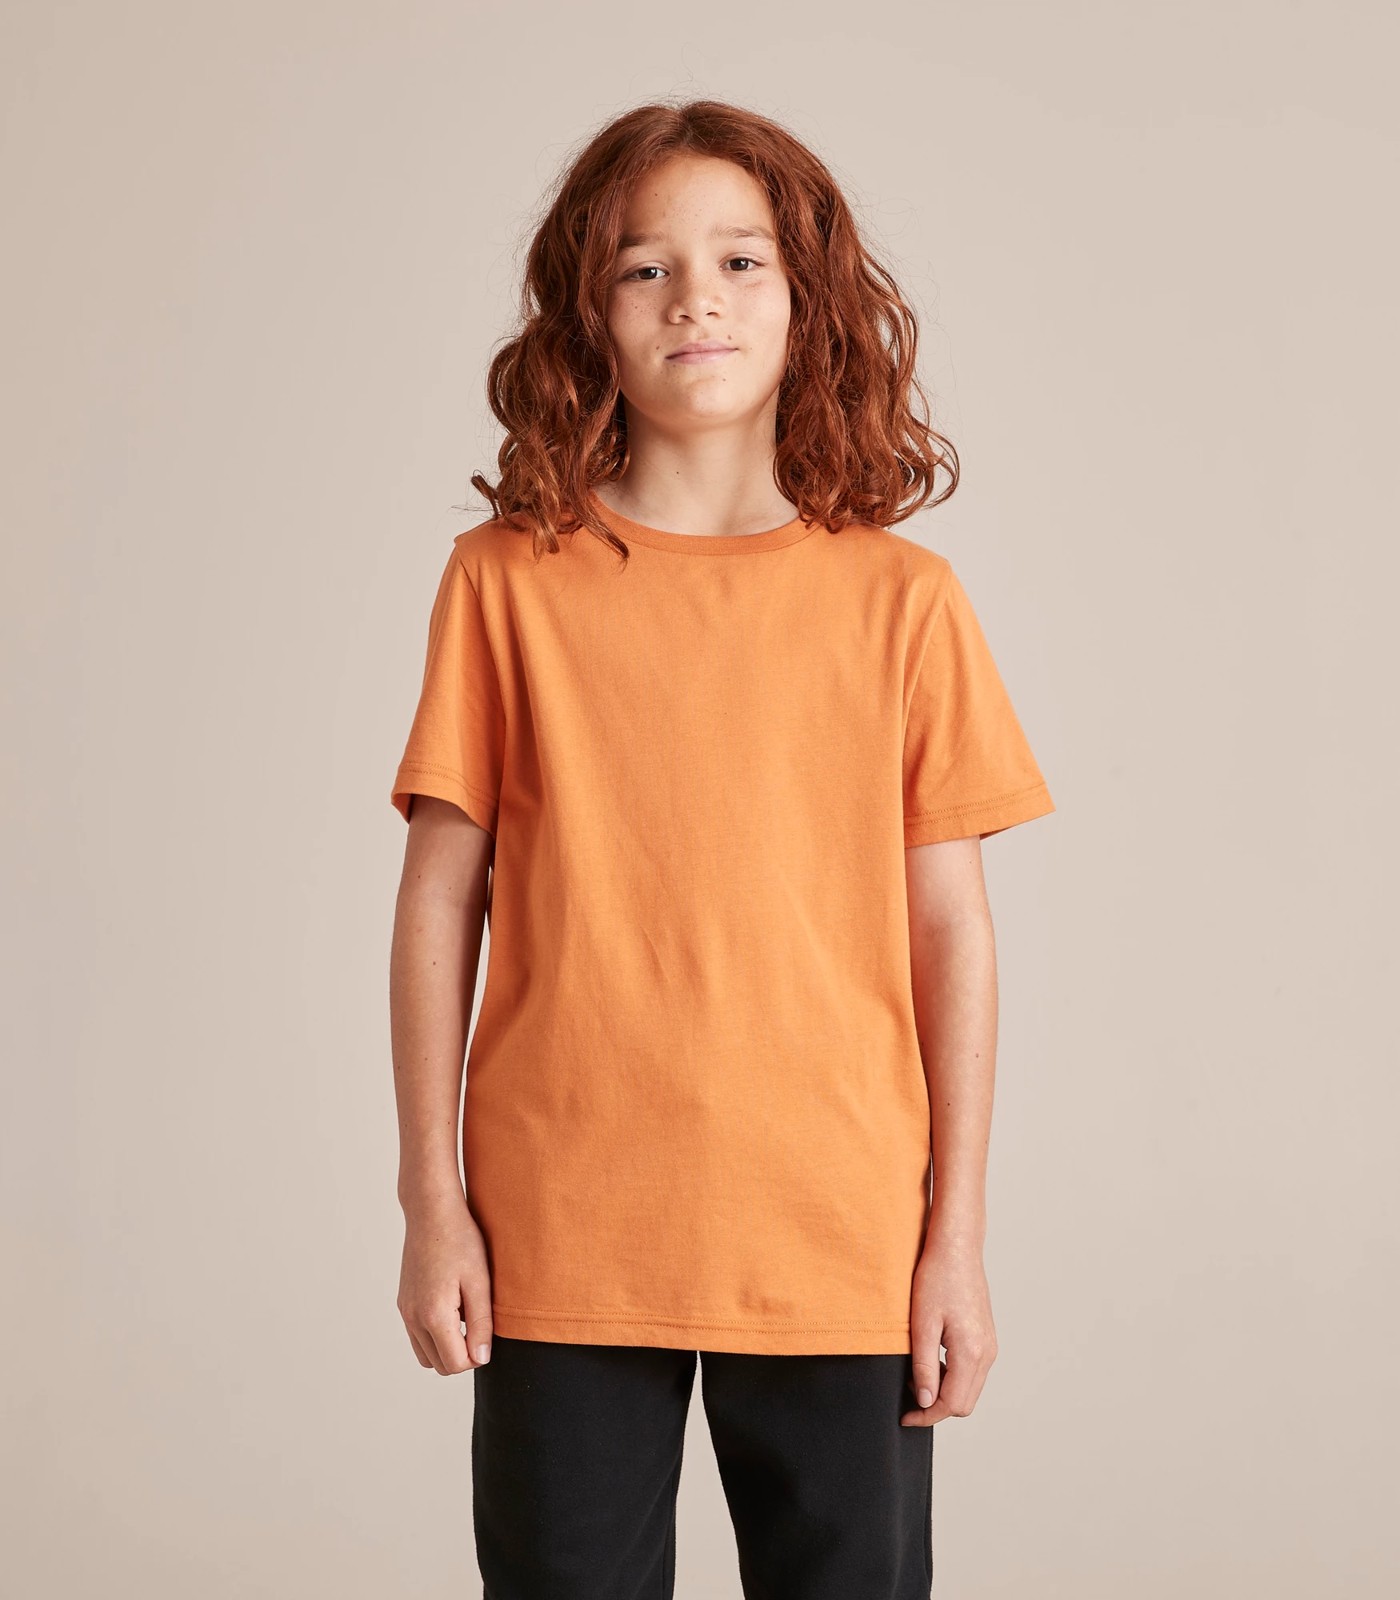 Short Sleeve Cotton School T-shirts | Target Australia